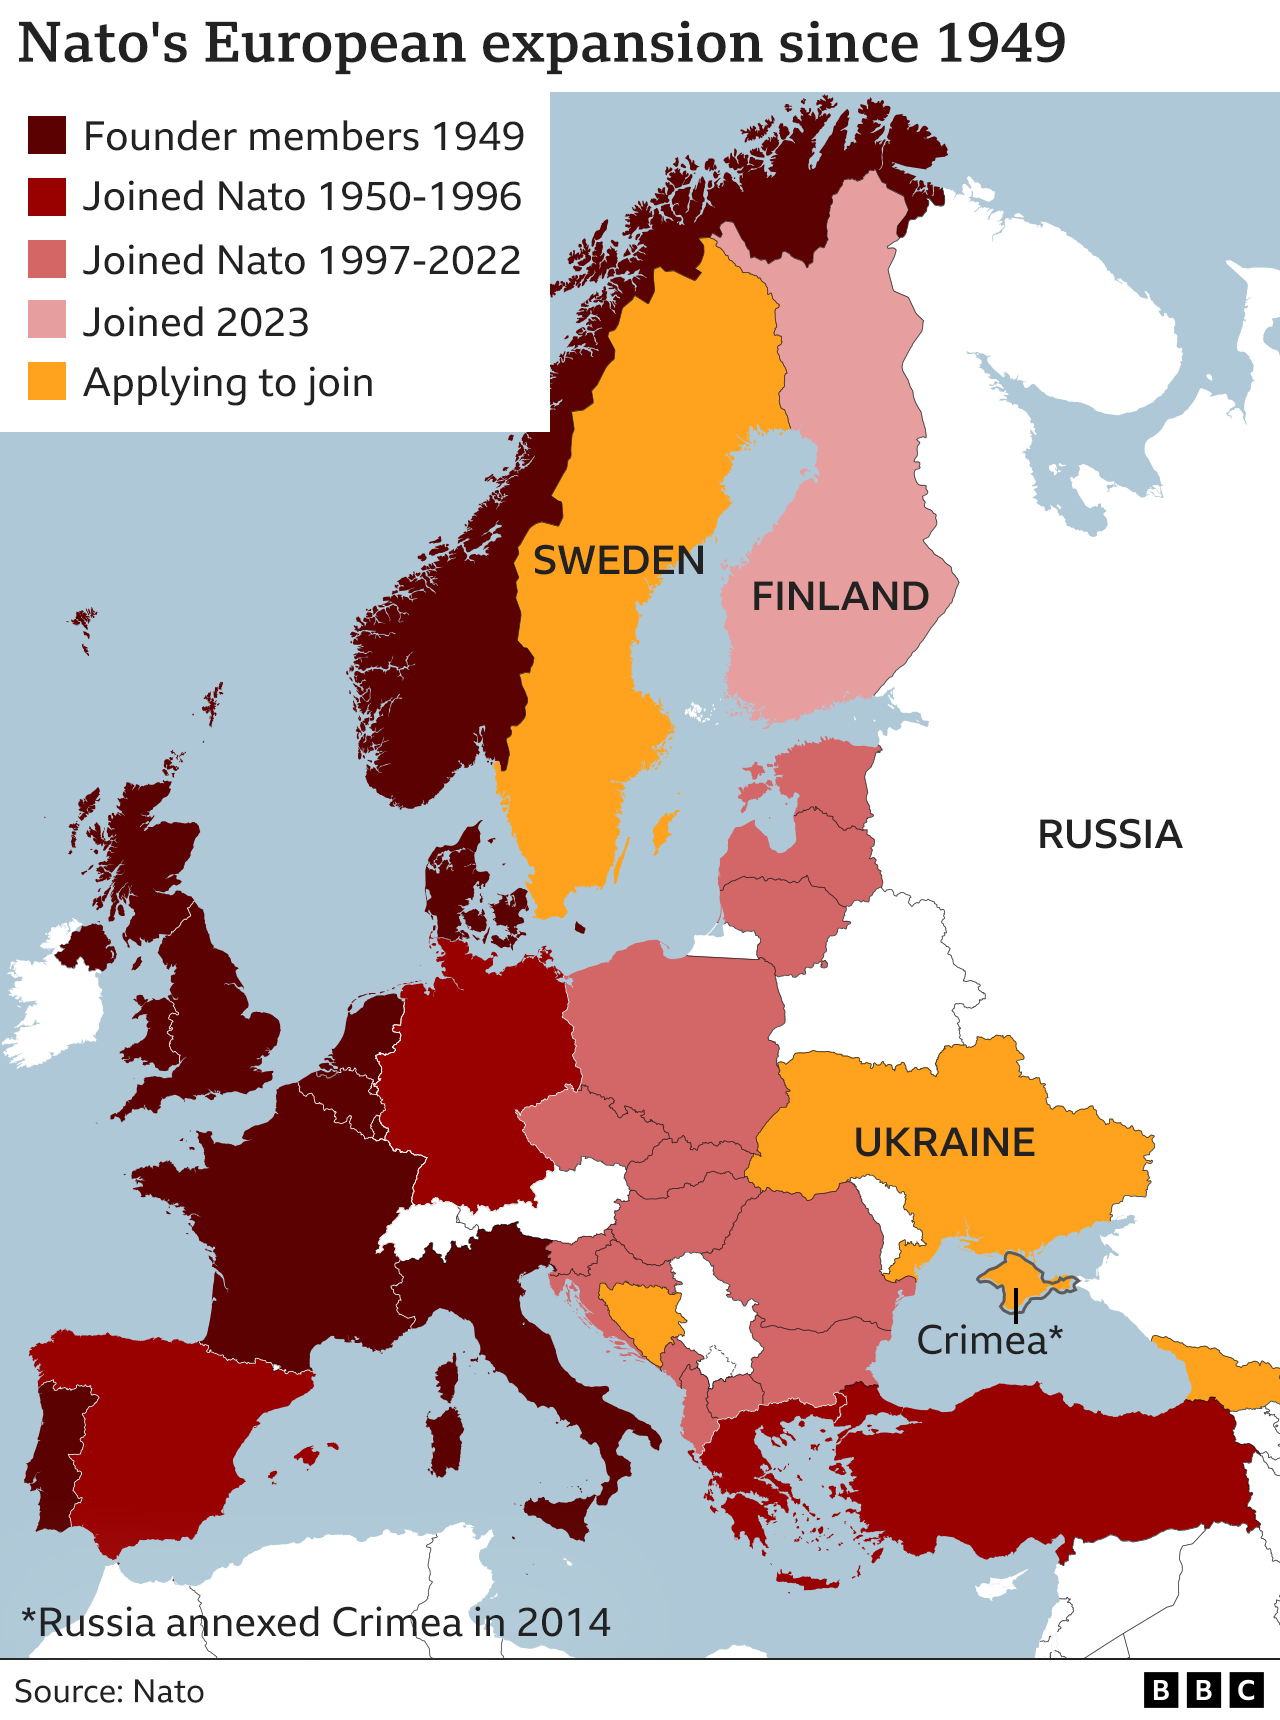  130362284 Nato's European Expansion Since 1949 2x640 Nc 2x Nc 